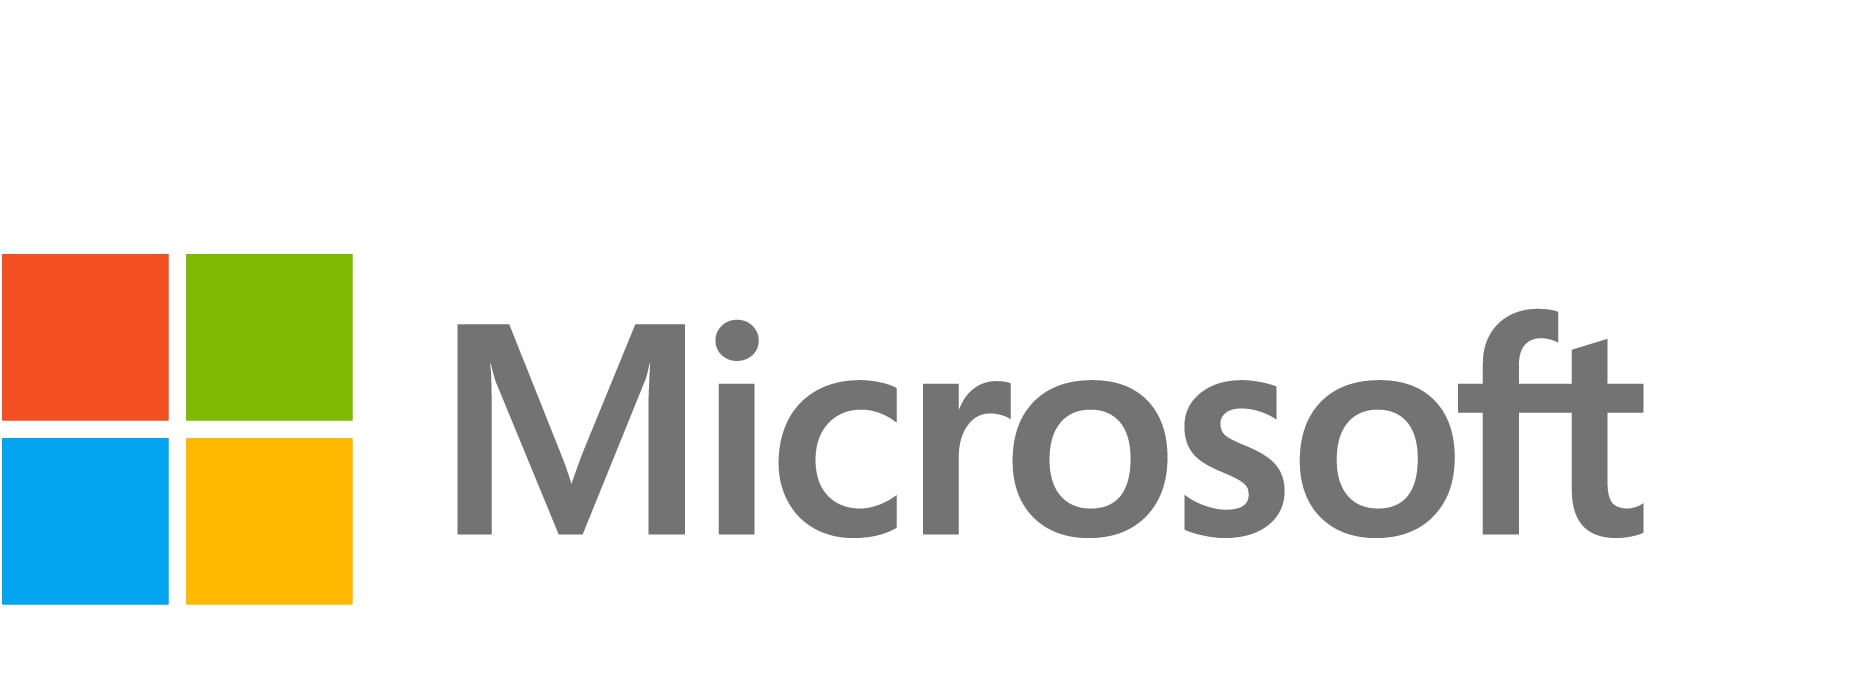 Microsoft Visio Professional - step-up license & software assurance - 1 dev